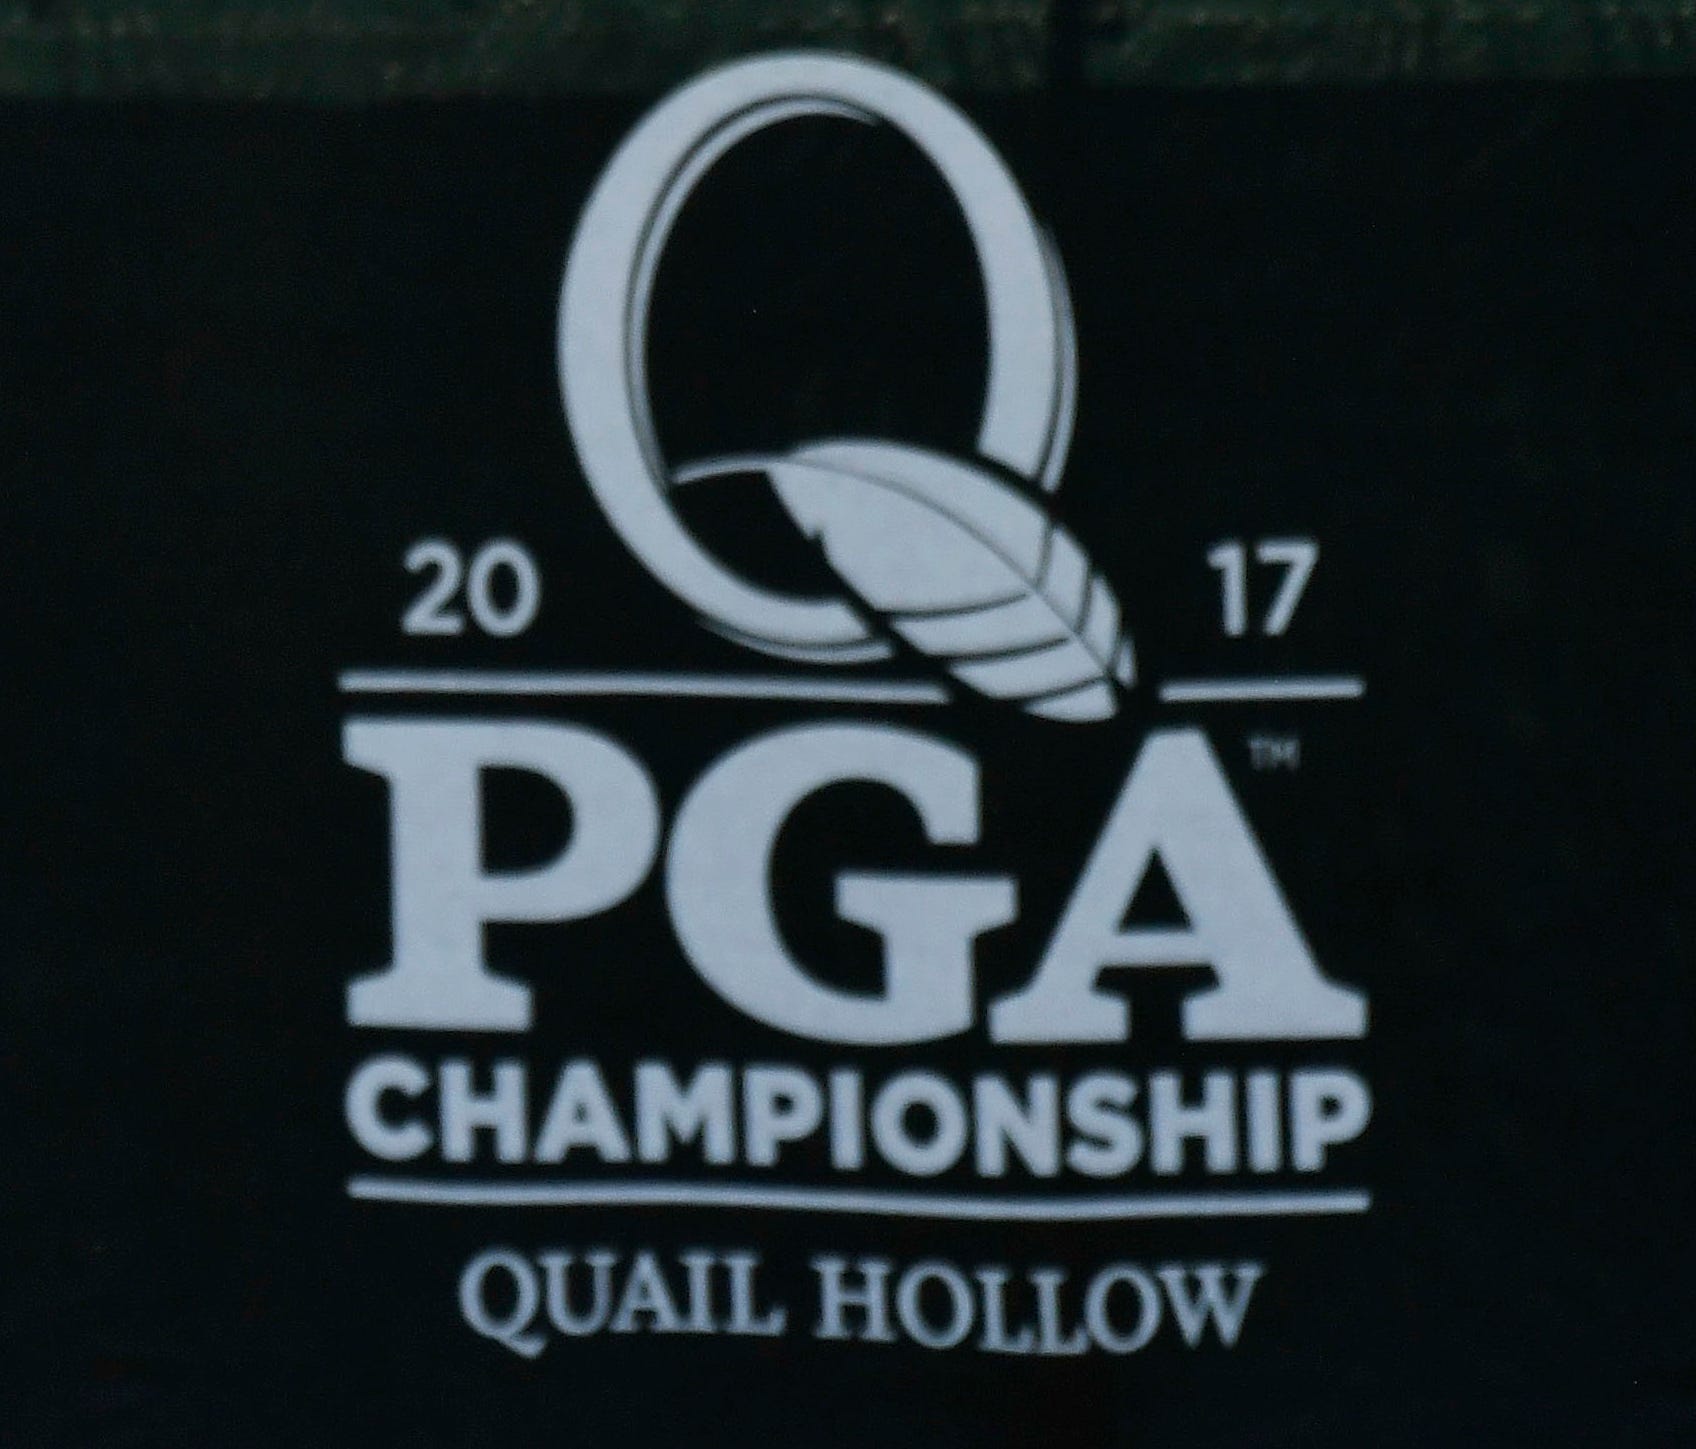 Quail Hollow hosts the 99th PGA Championship.